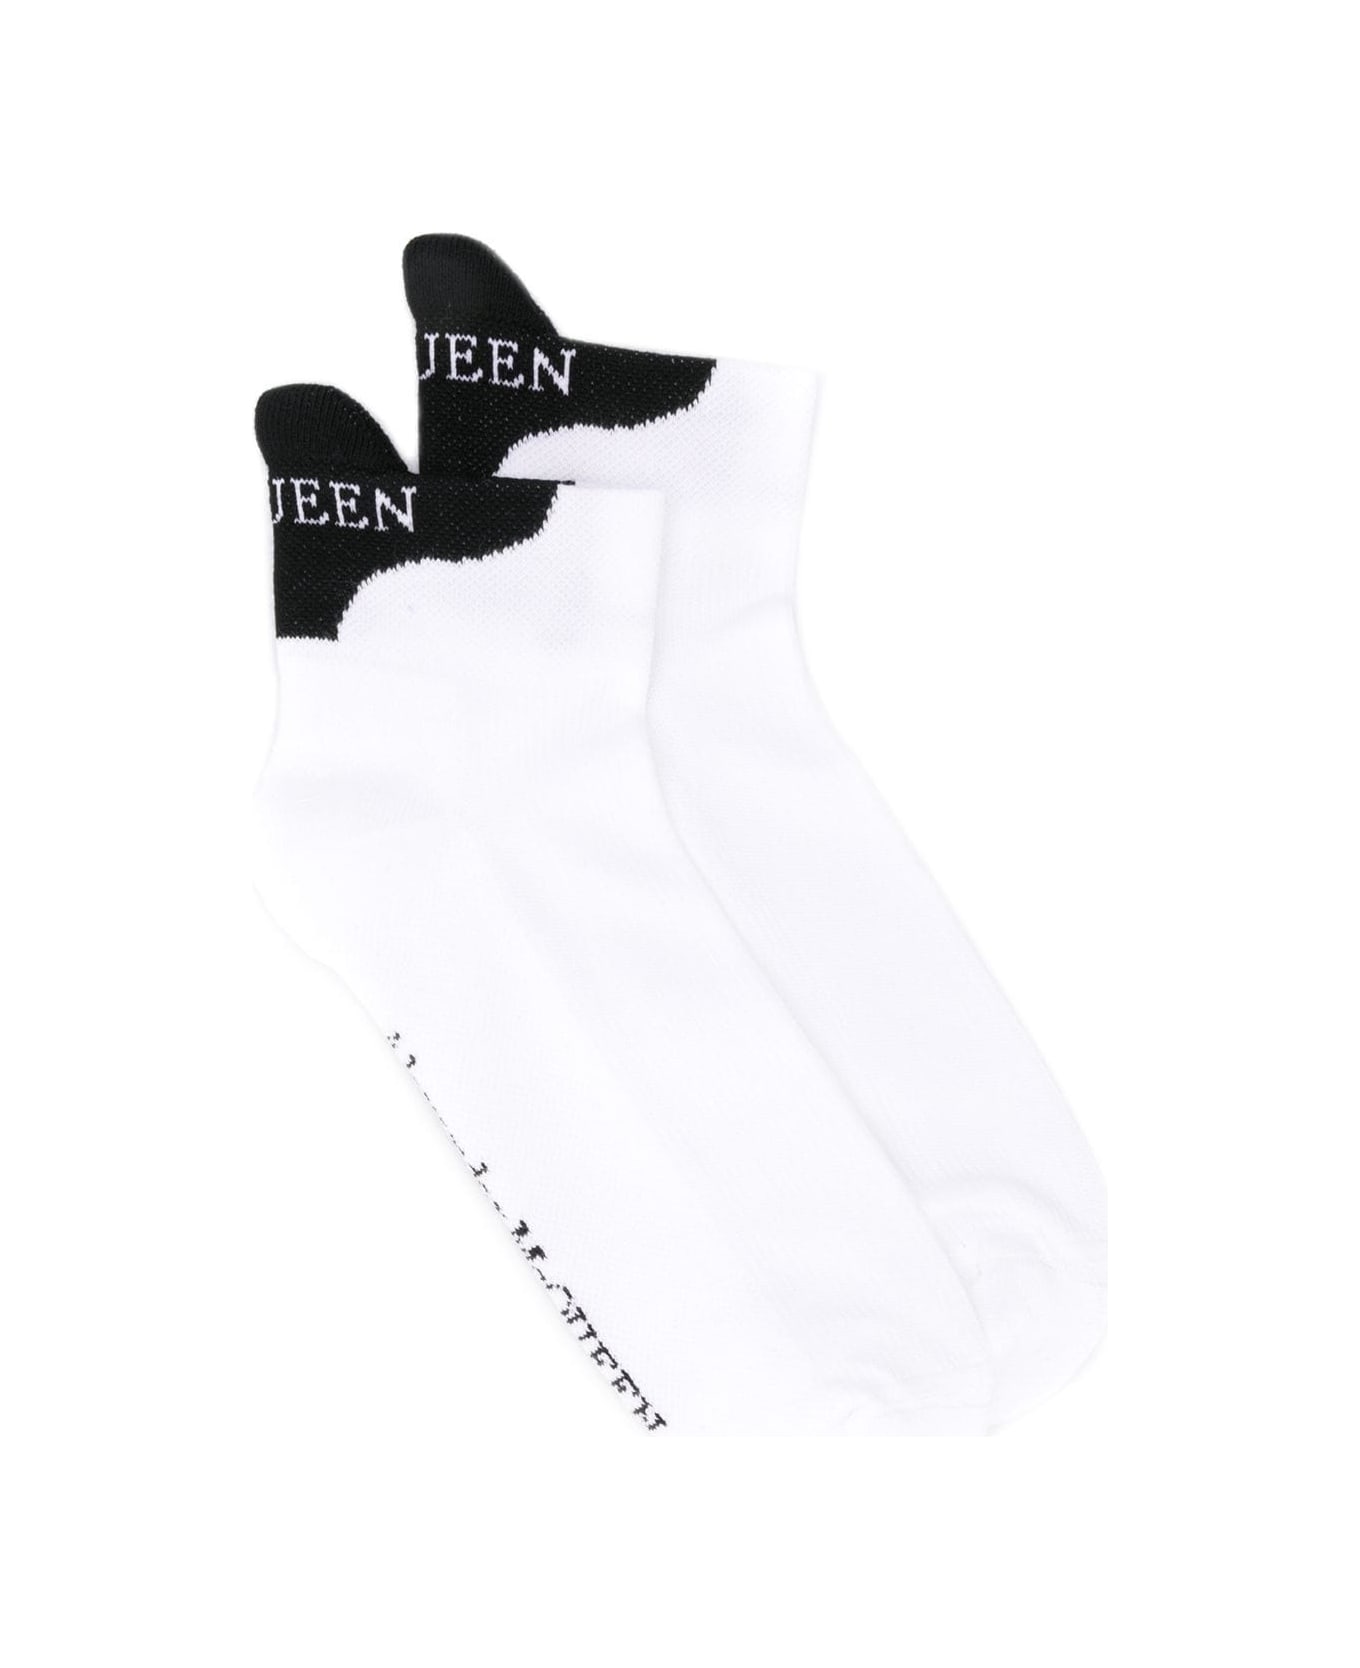 Alexander McQueen Man's White Cotton Socks With Logo Print - White 靴下